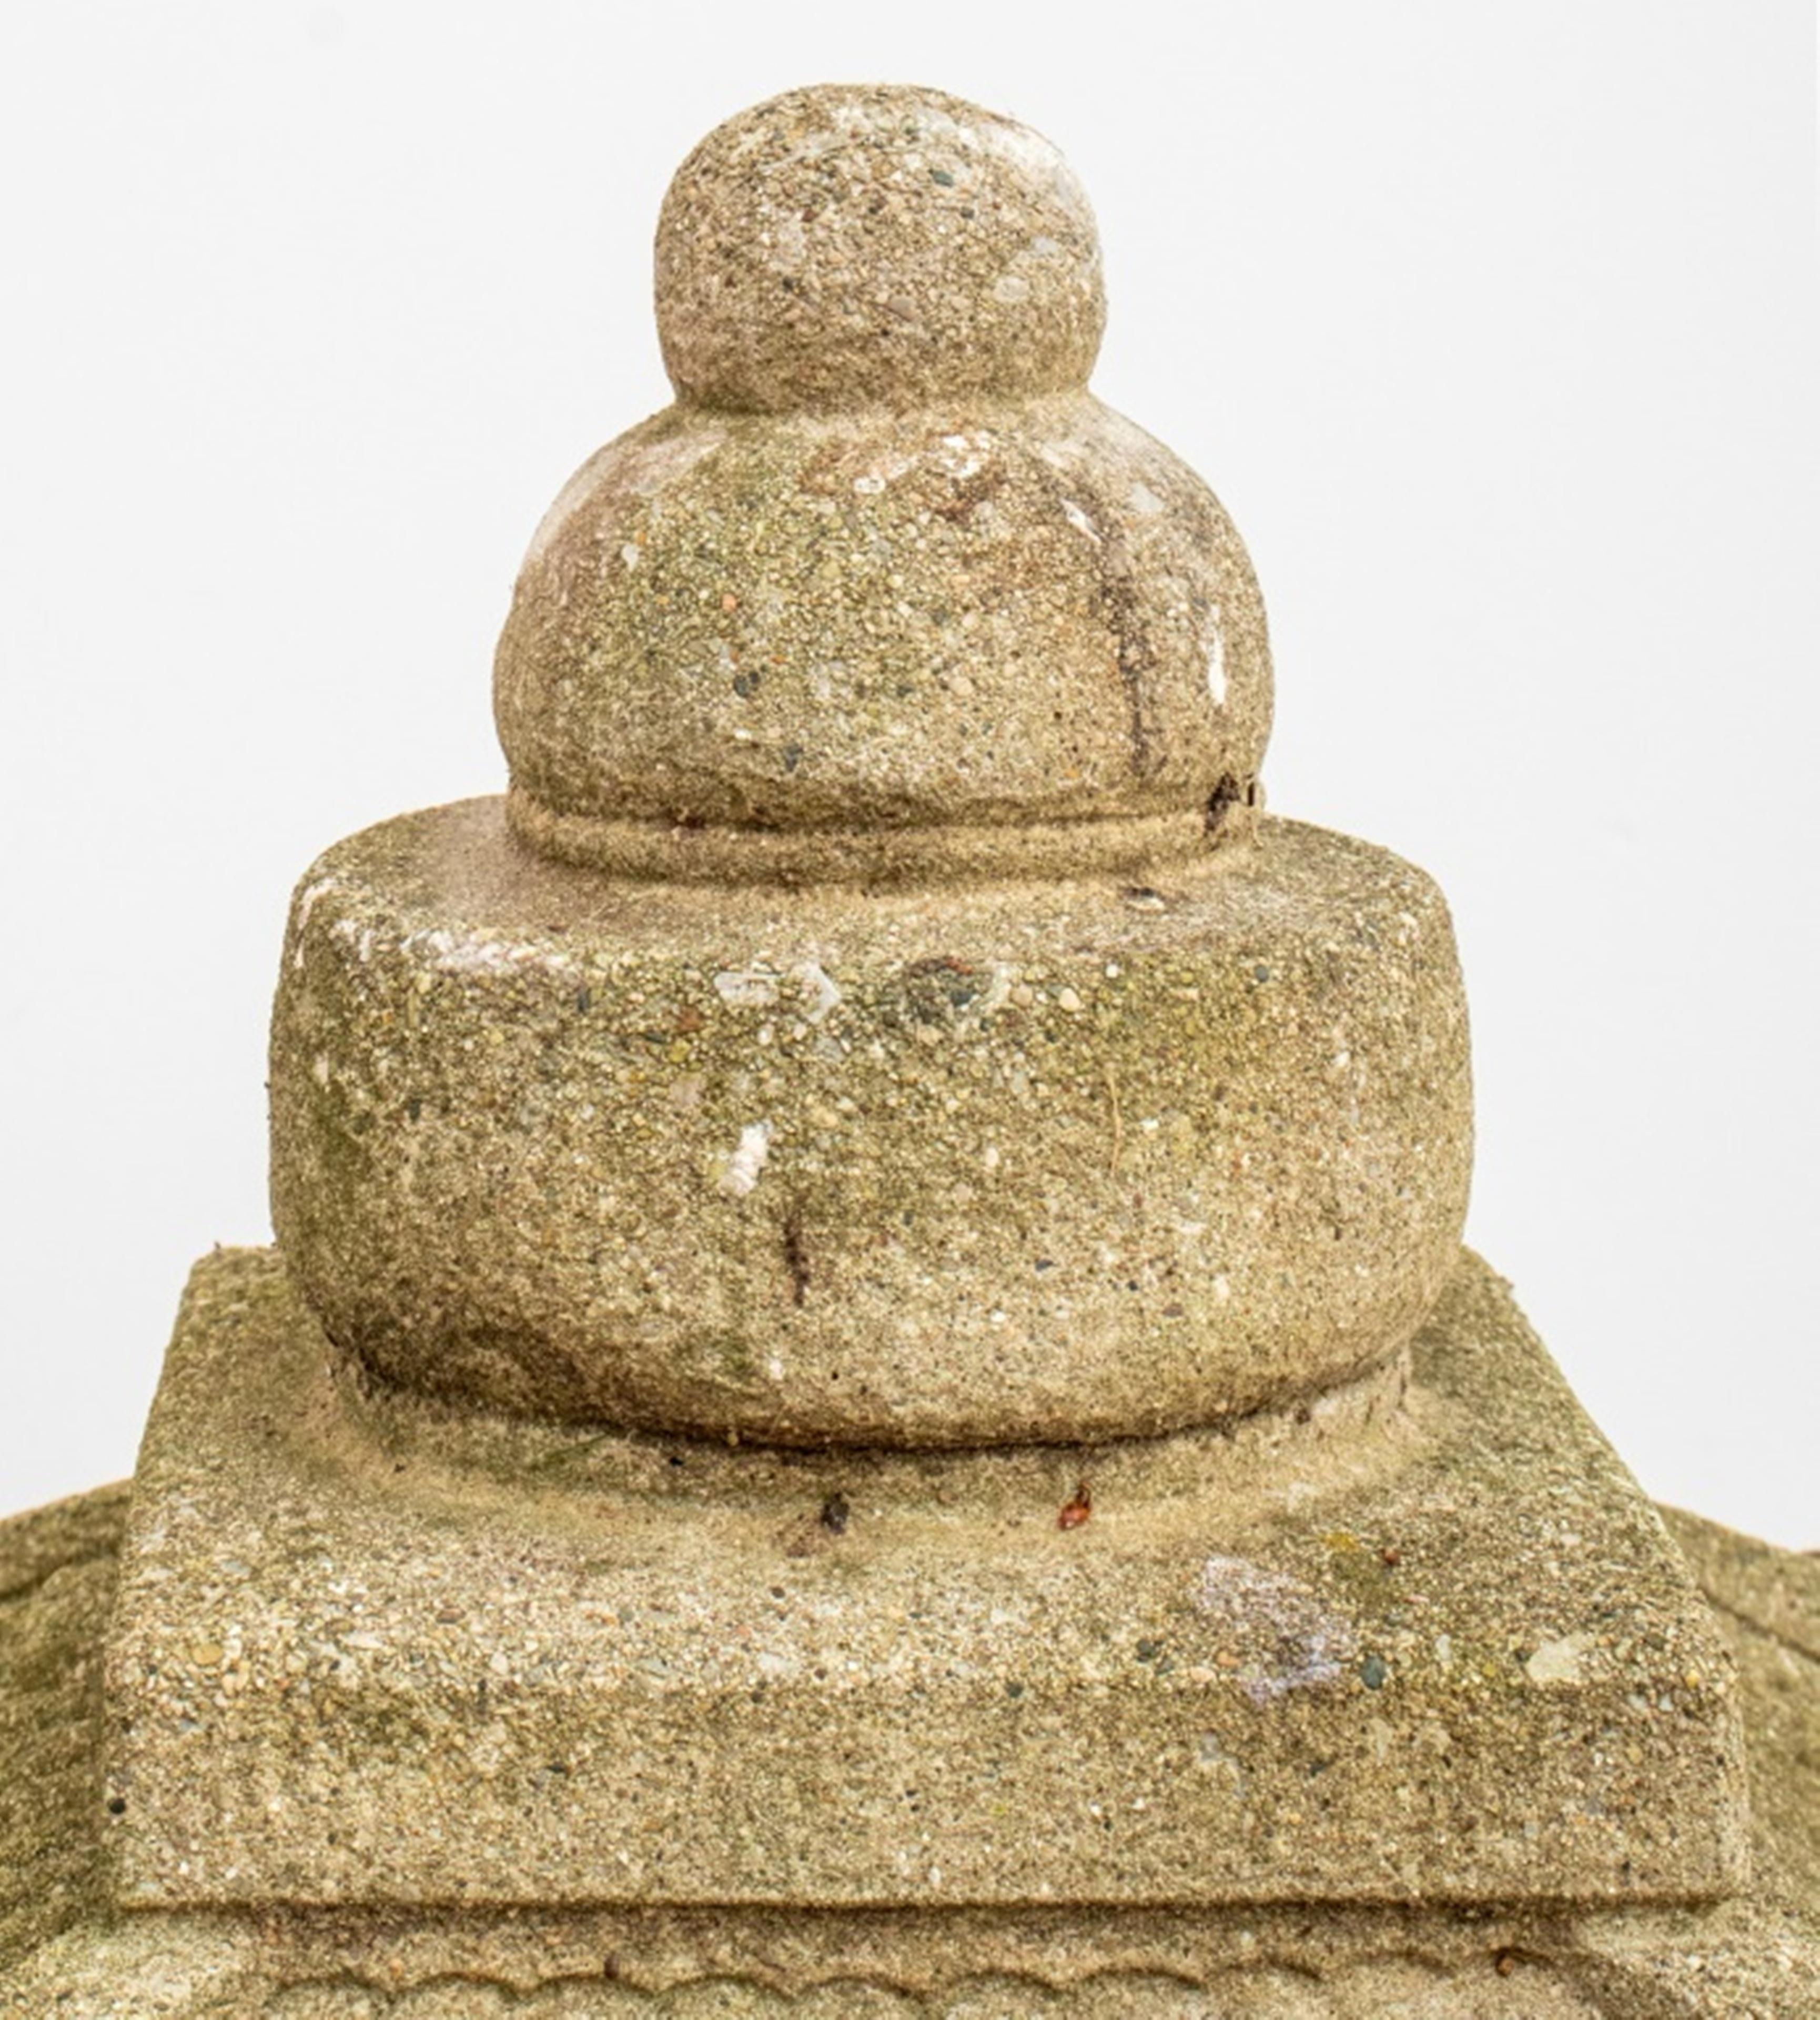 Tall square cement pagoda landscape ornaments, 5 pieces; 
Dimensions: 56